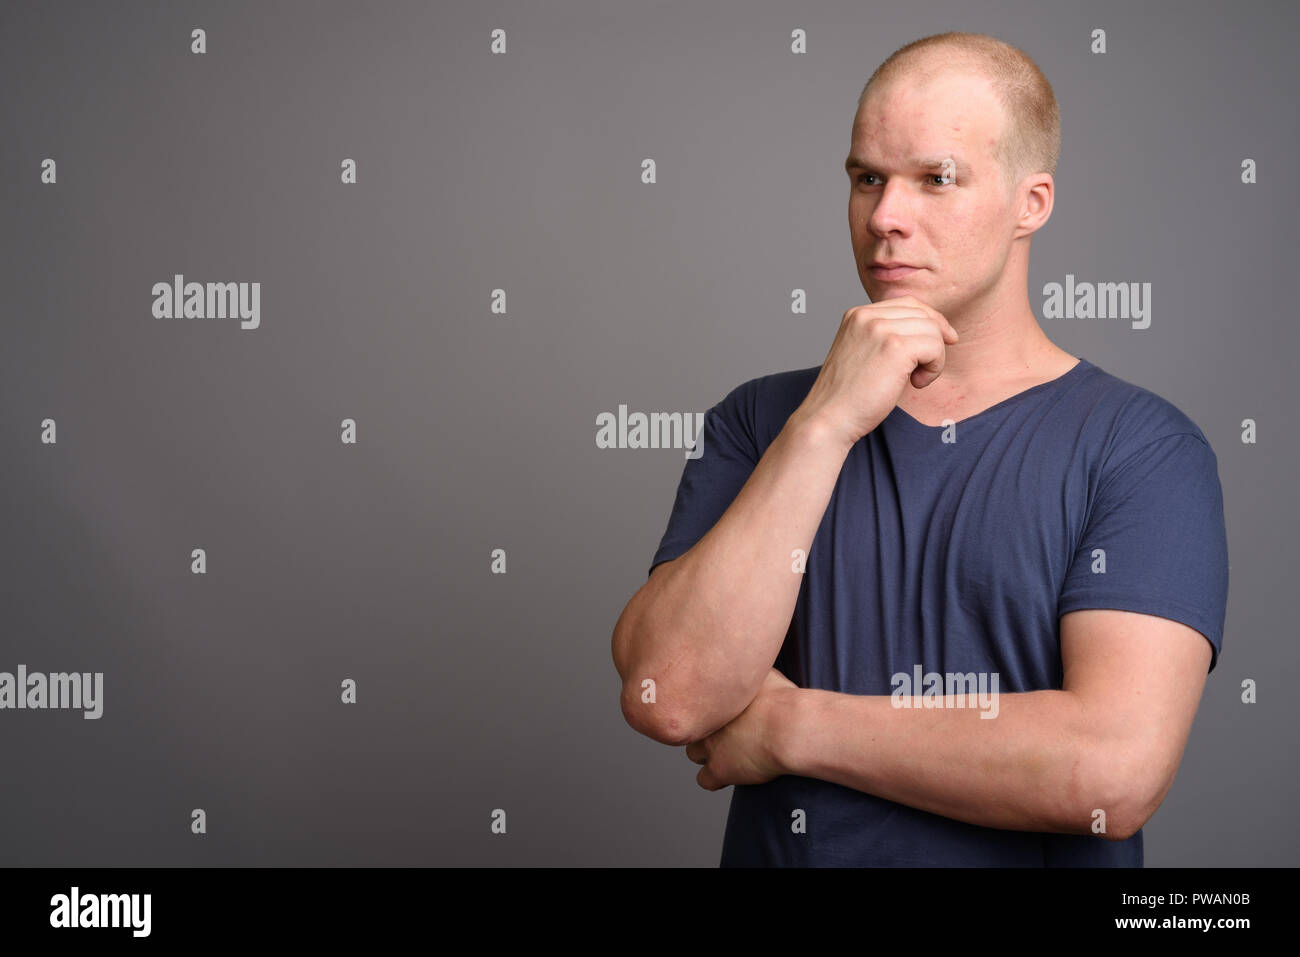 Bald man wearing blue shirt against gray background Stock Photo